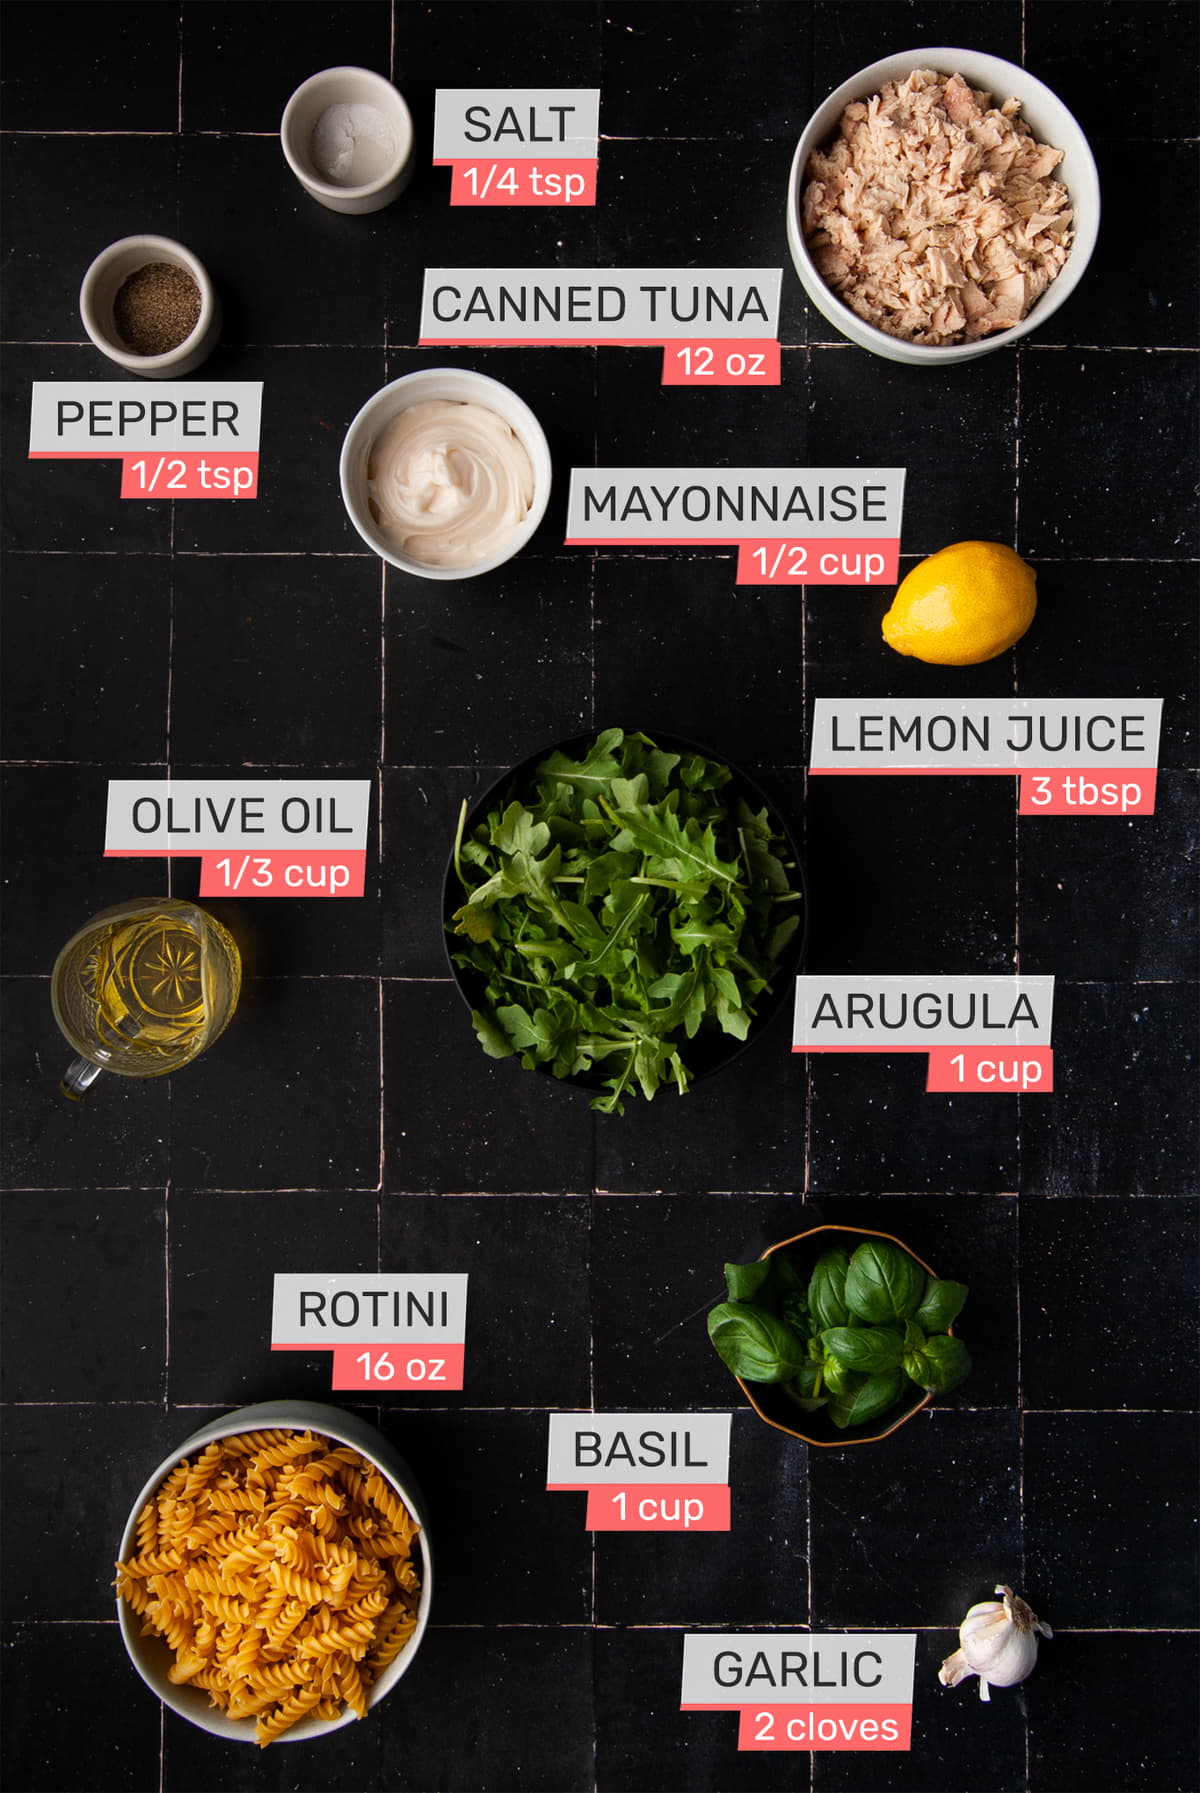 salt, pepper, canned tuna, mayonnaise, lemon, arugula, olive oil, rotini, basil, and garlic